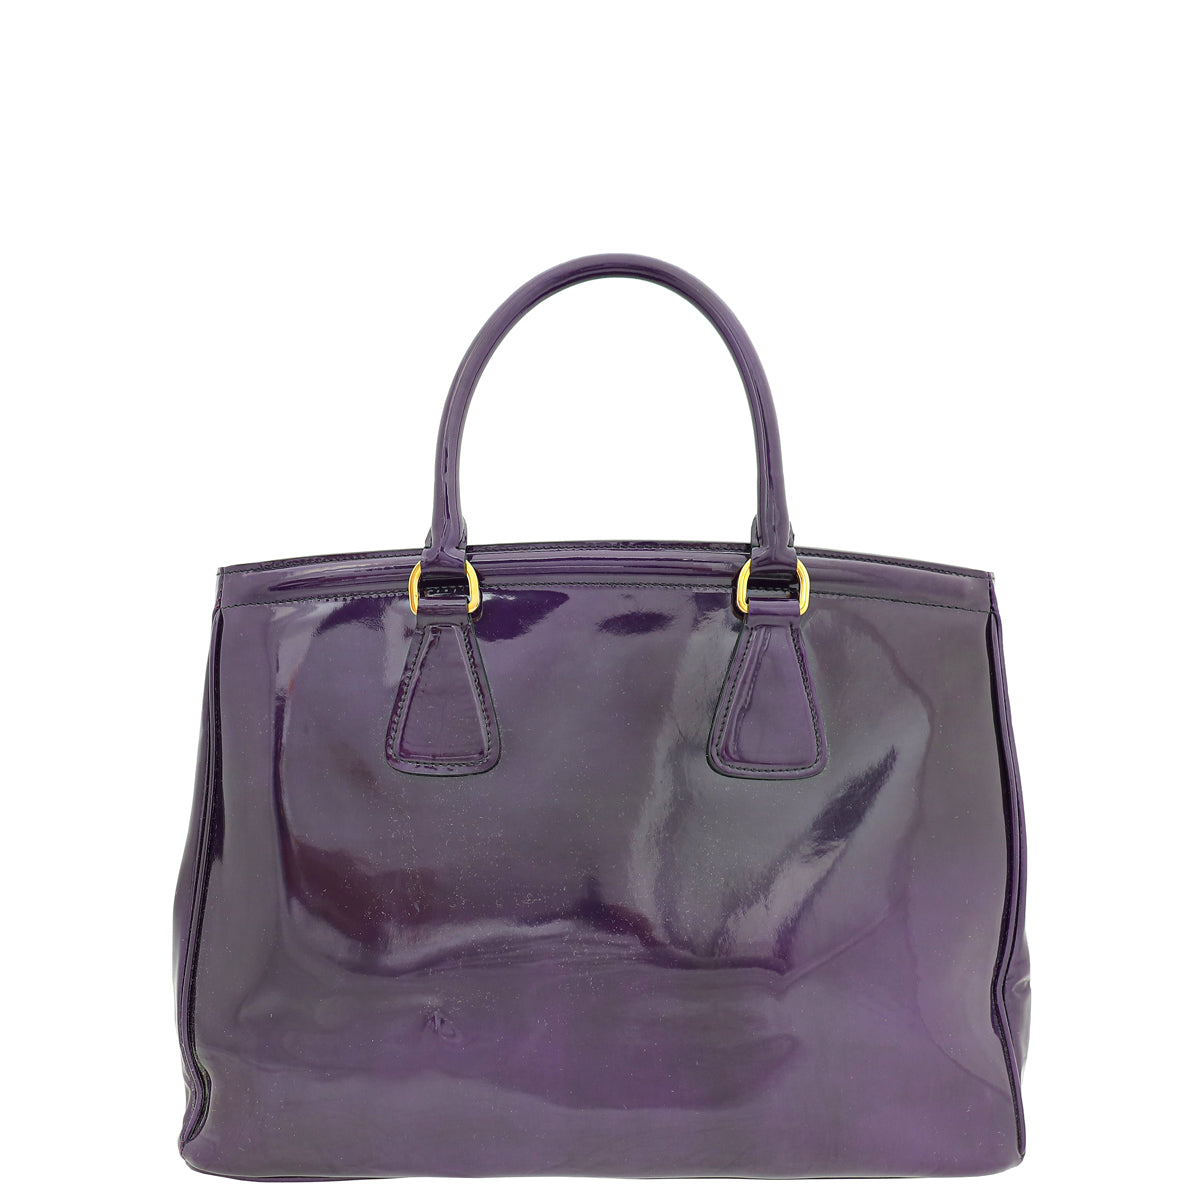 Prada Violet Spazzolato Parabole Tote Bag